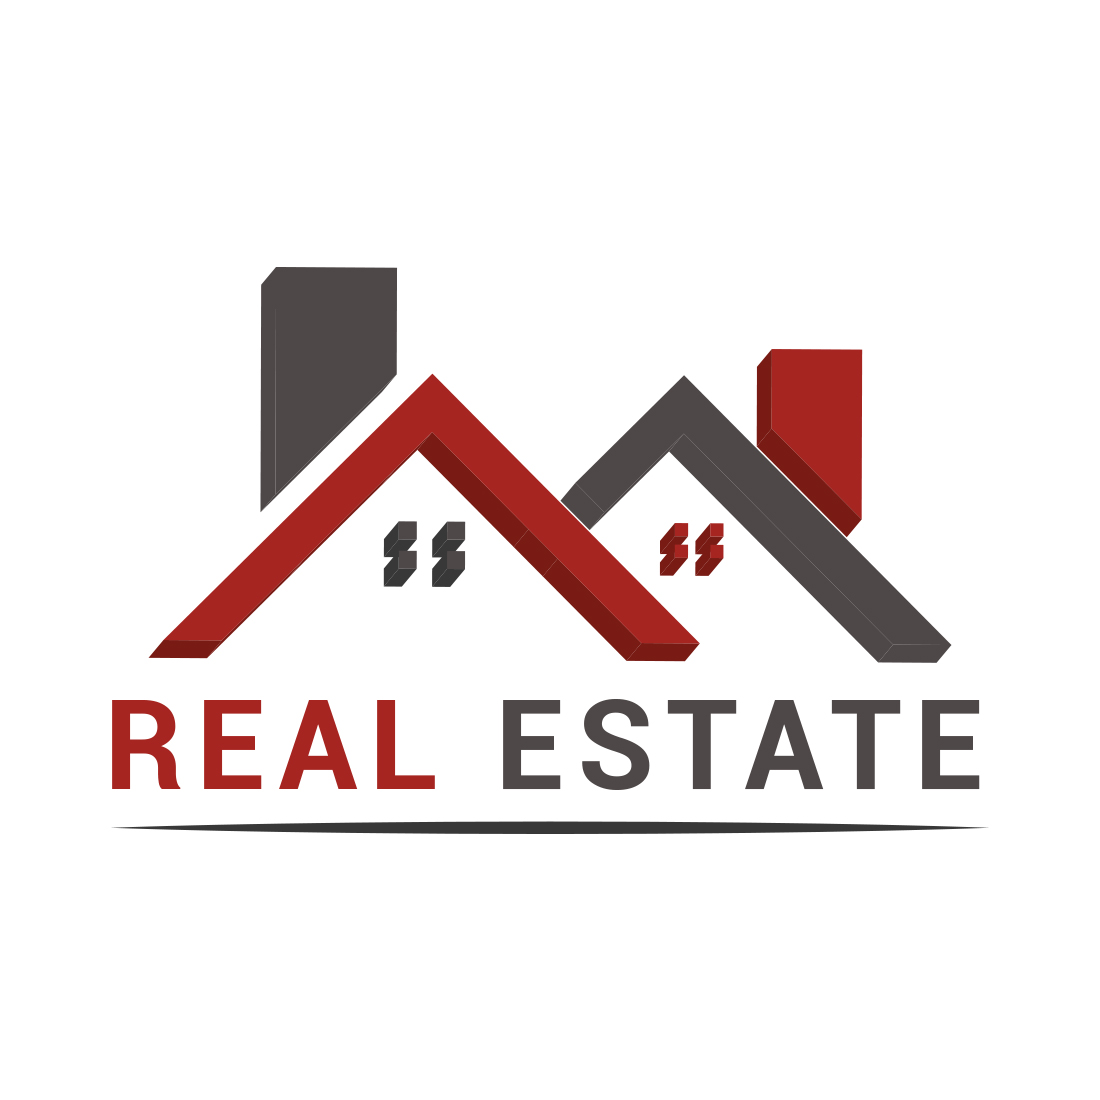 Real estate 3D logo design preview image.